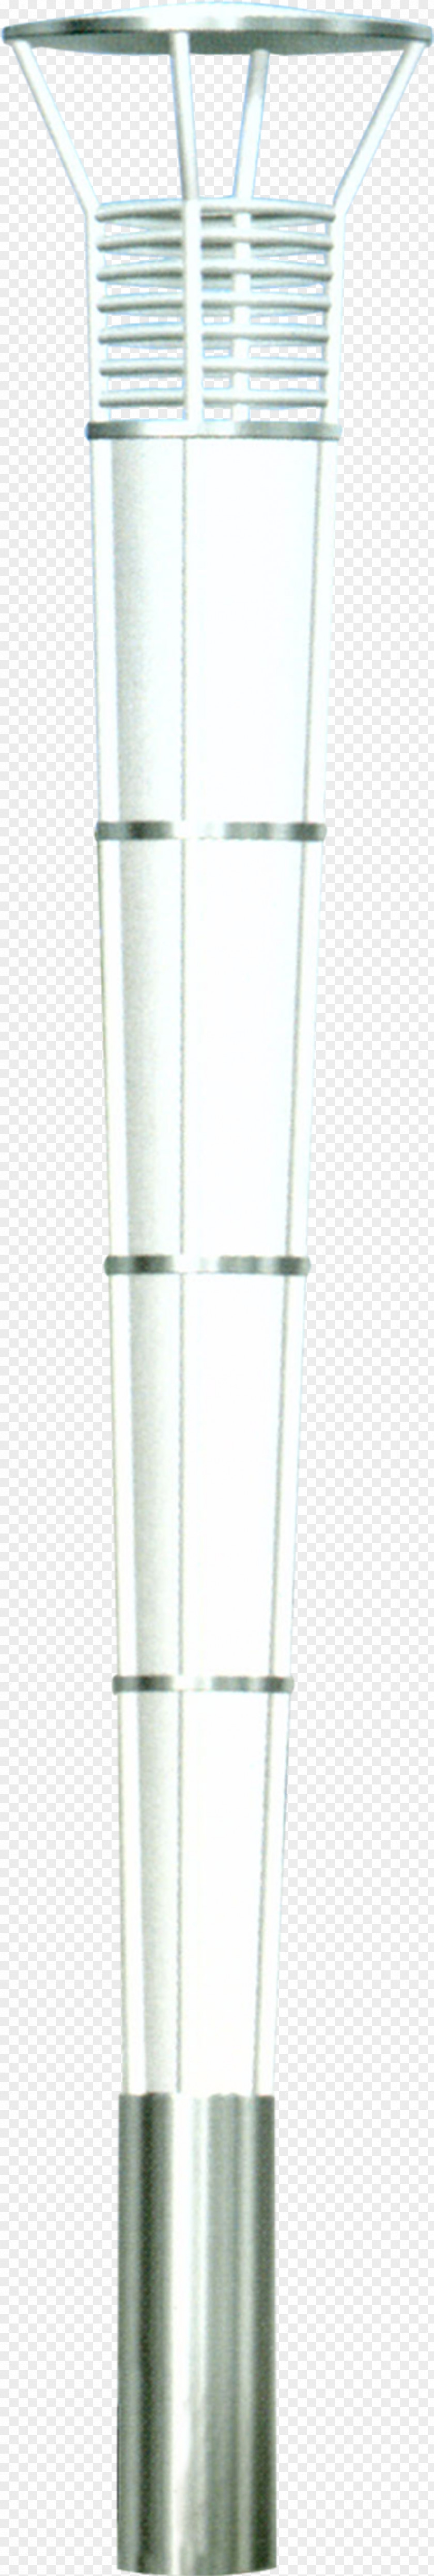 Lamp Street Light Pole Texture Modeling Renderings PNG